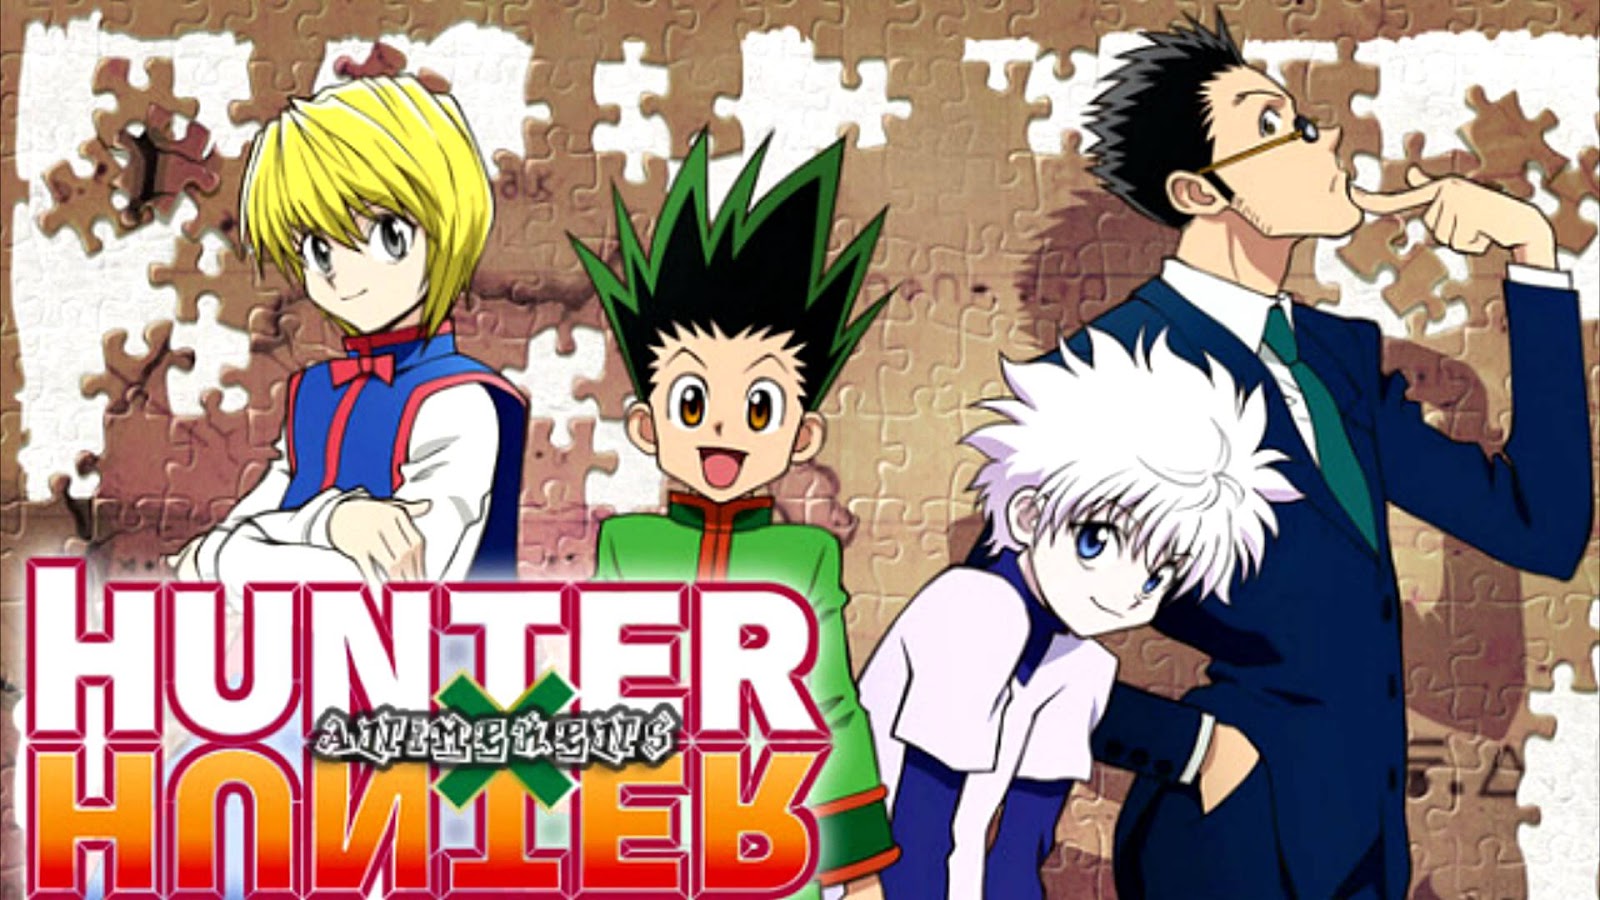 Hunter x Hunter Anime Image